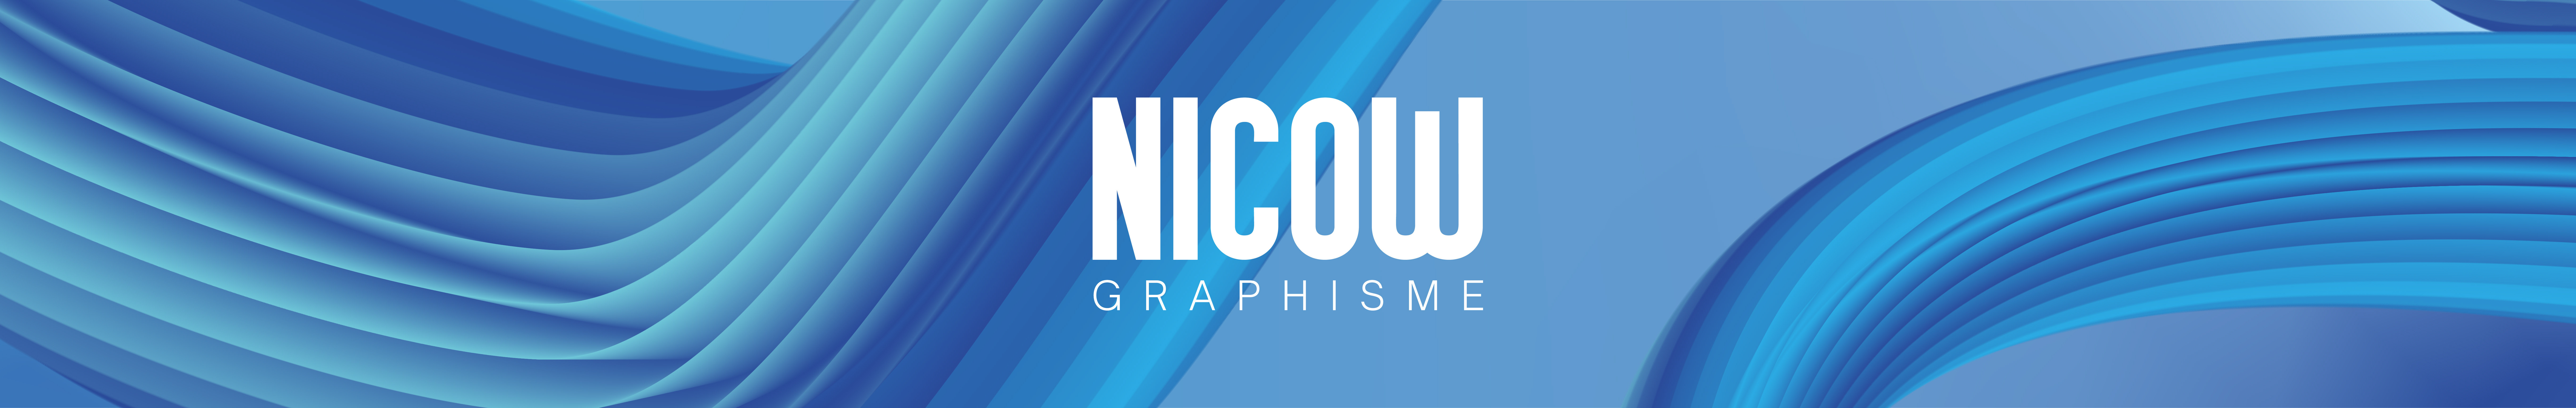 Nicow Graphisme's profile banner